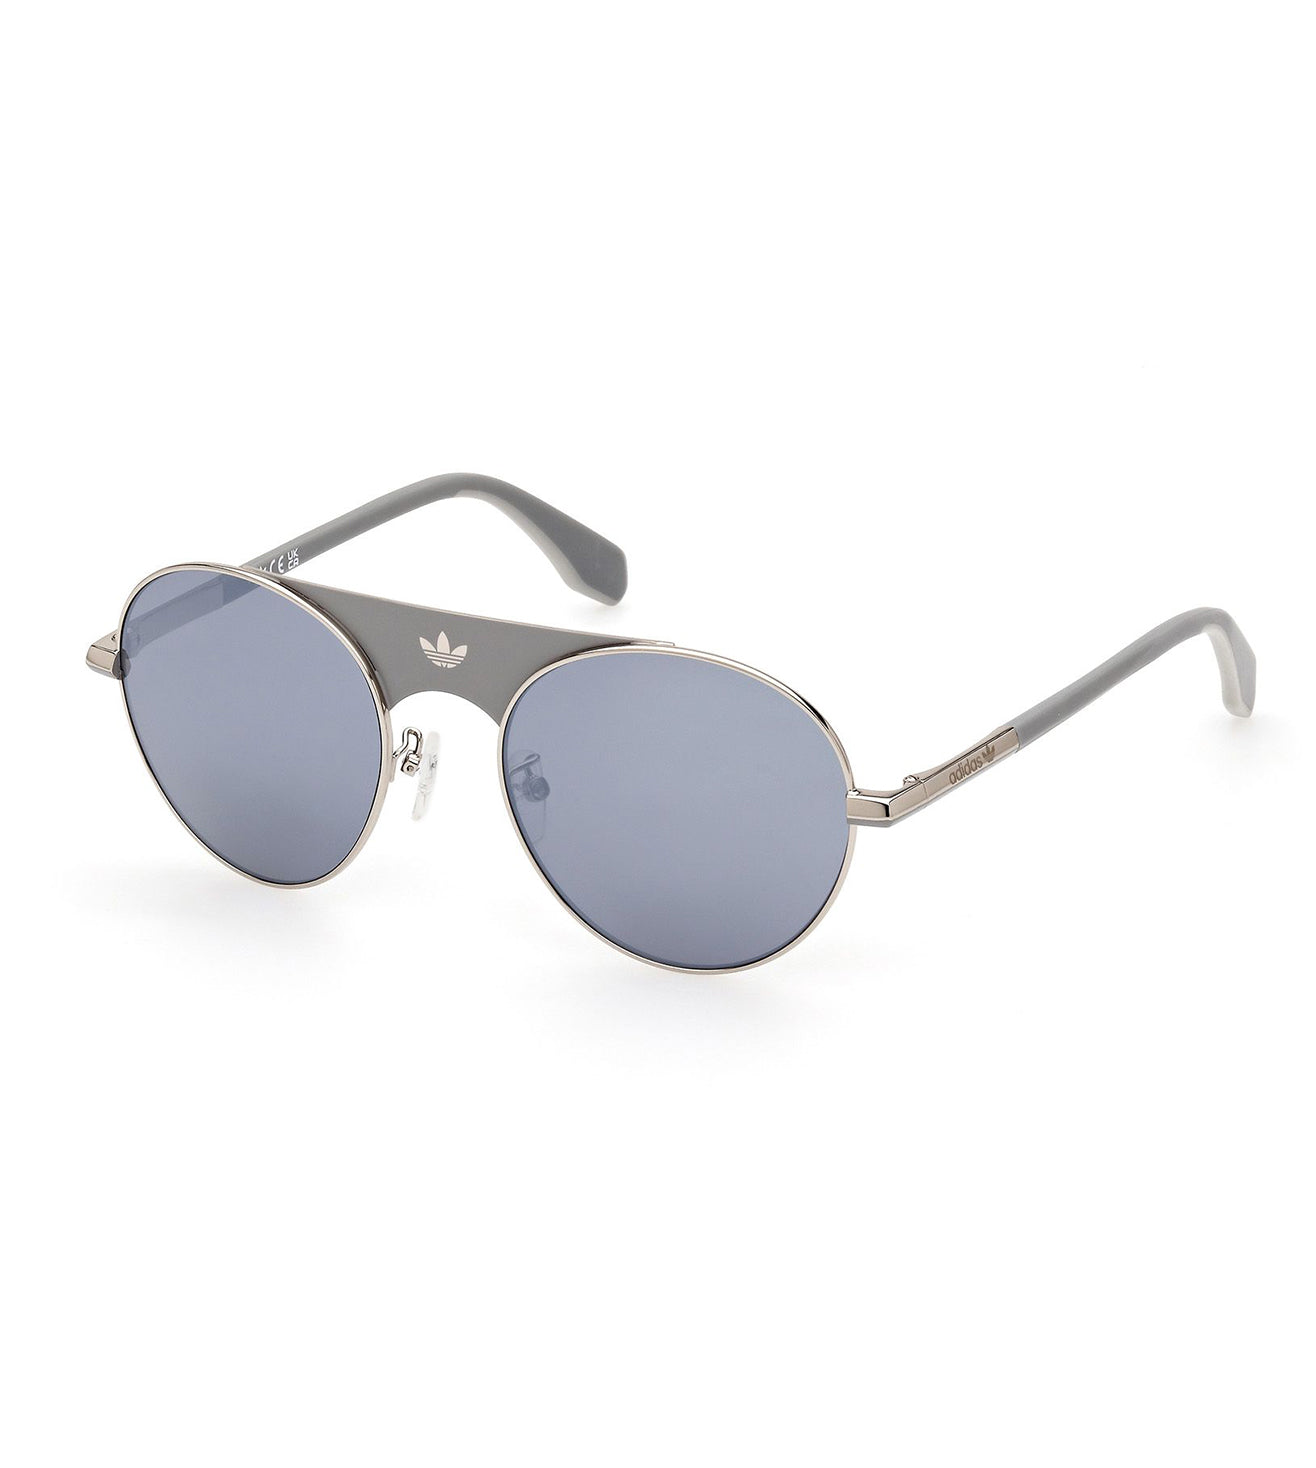 Adidas Original Unisex Grey Round Sunglasses